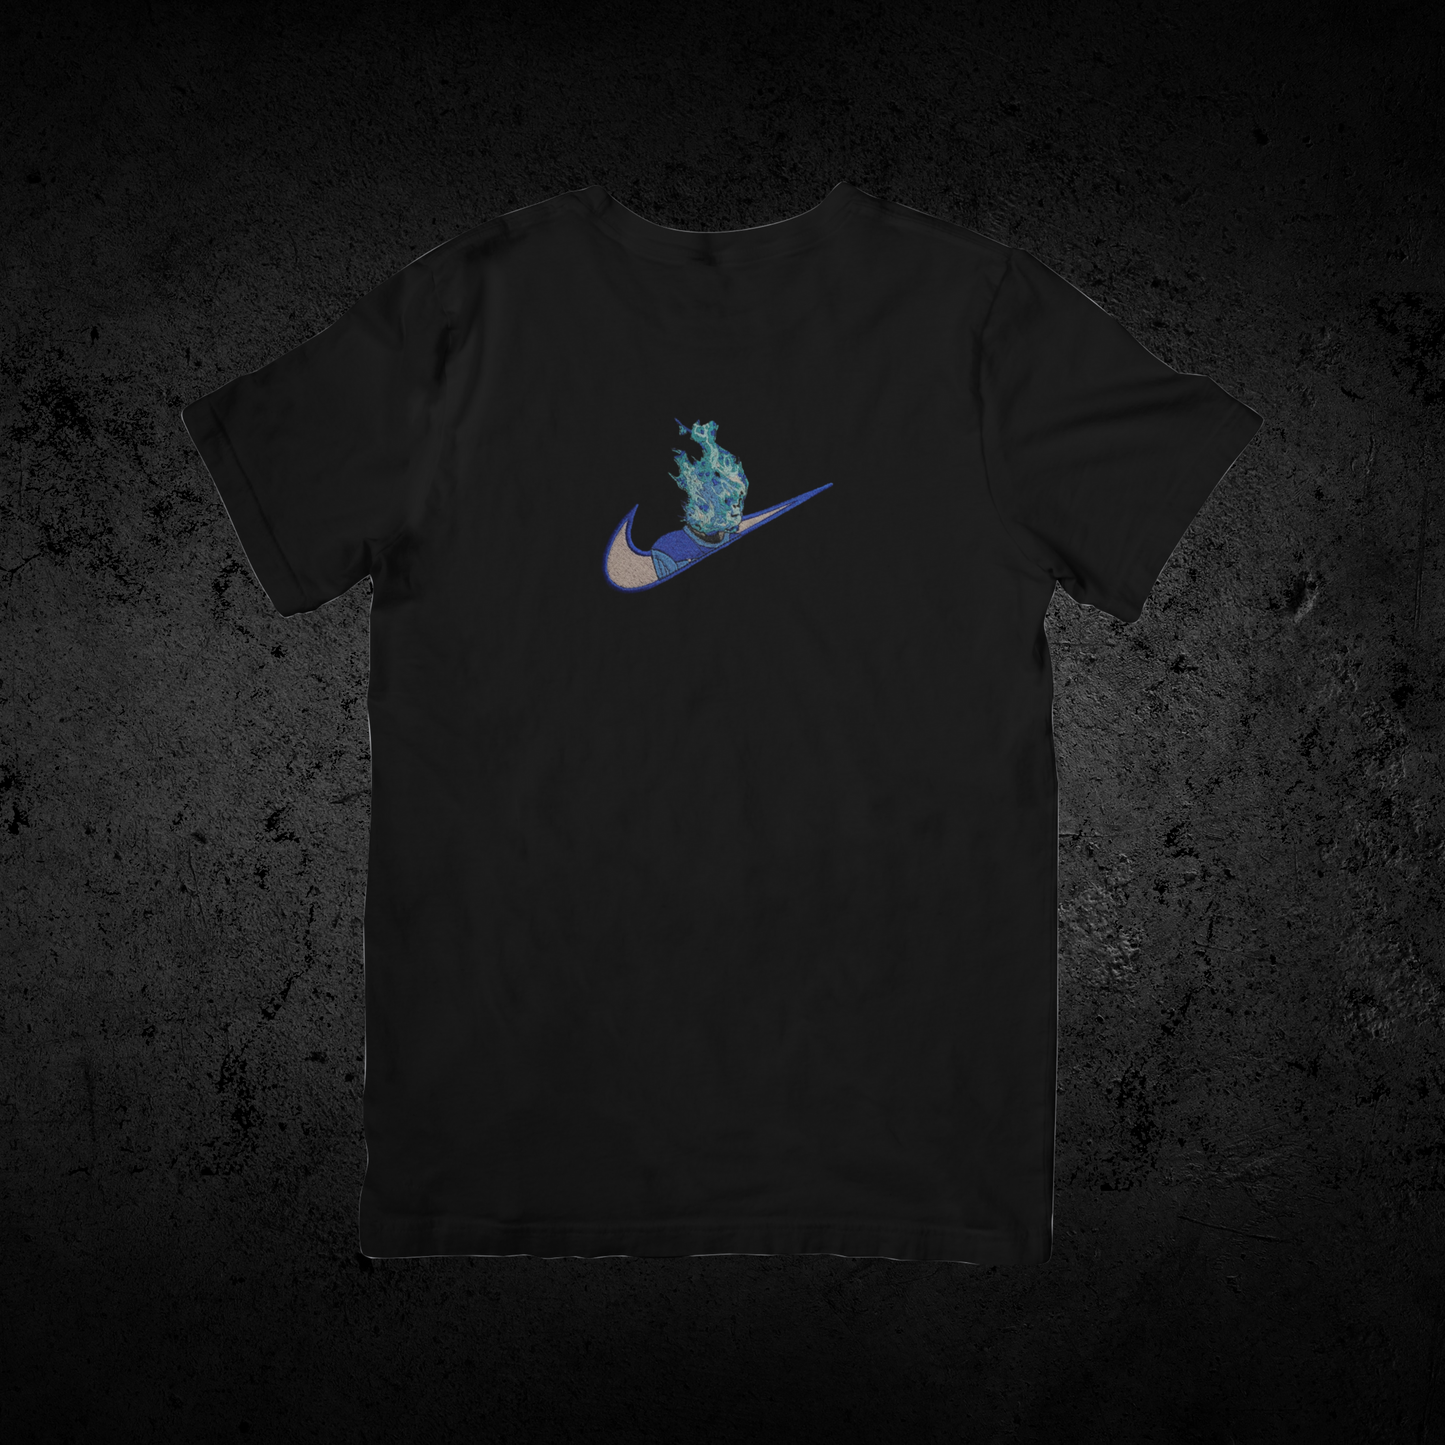 Limited Dave PsychoDrama X T-Shirt